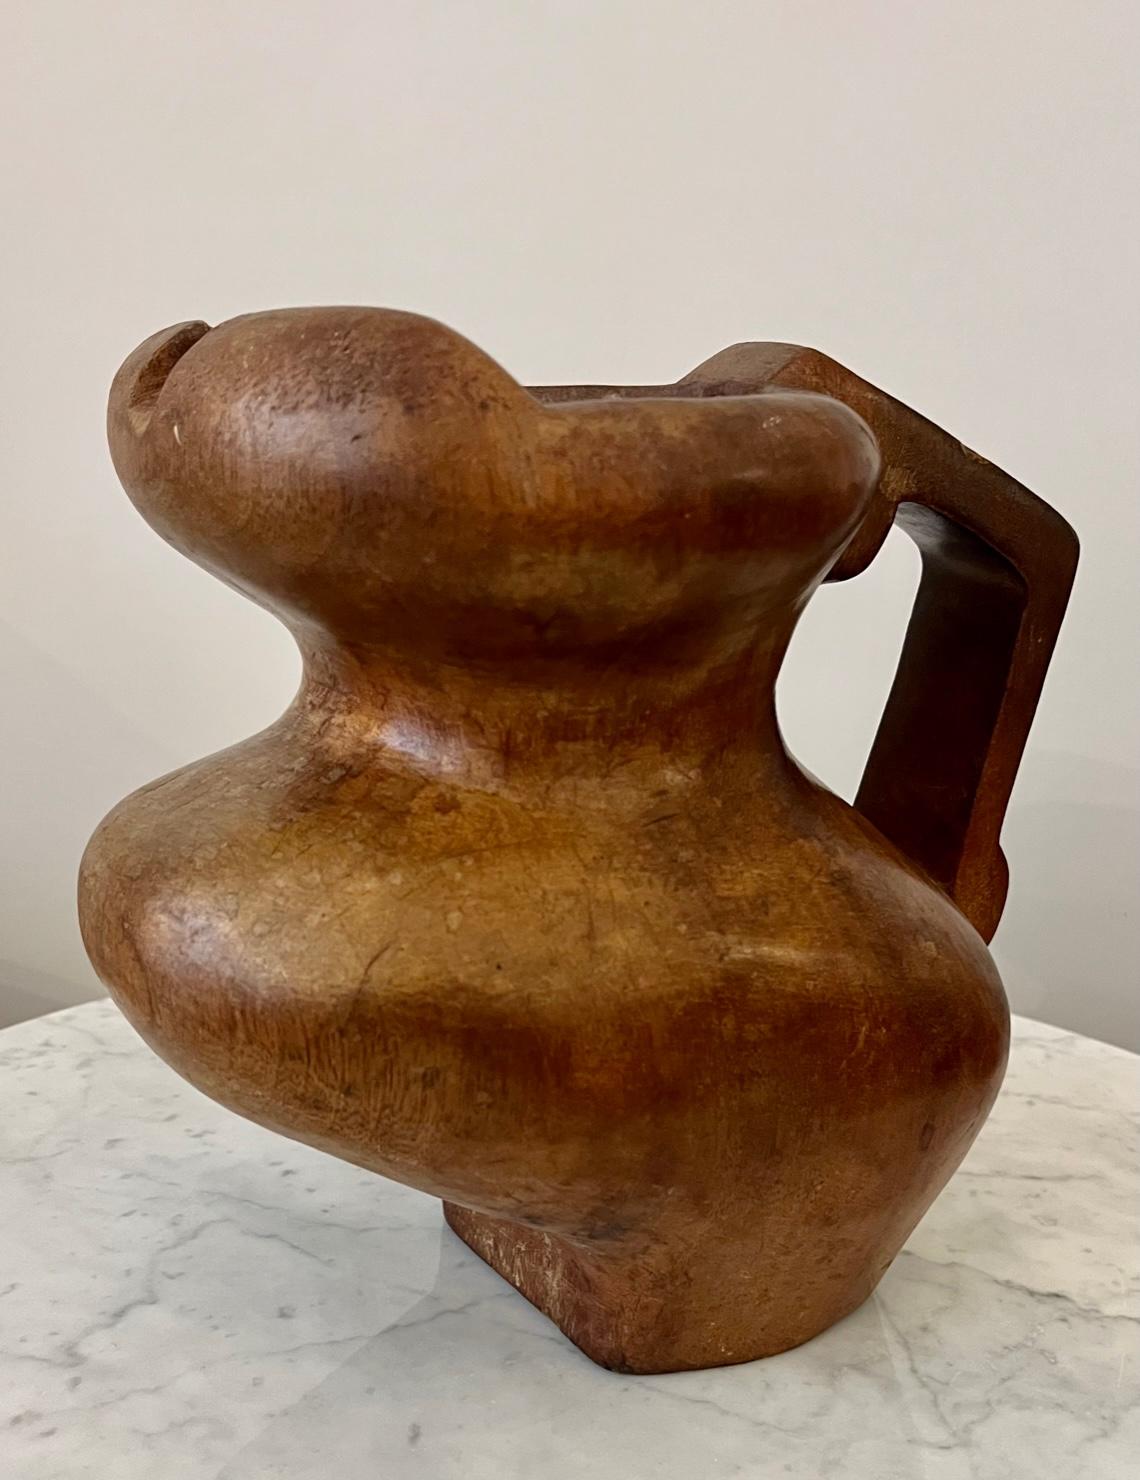 Monoxyle pitcher and its bowl in walnut.
Folk art in brutalist style 
France 
circa 1950 

Dimension : 

Jug : 
Height : 22 cm / 8,66 inch 
Depth : 24 cm / 9,44 inch 
Width : 15 cm / 5,90 inch 

Bowl : 
Height : 5 cm / 1,96 inch